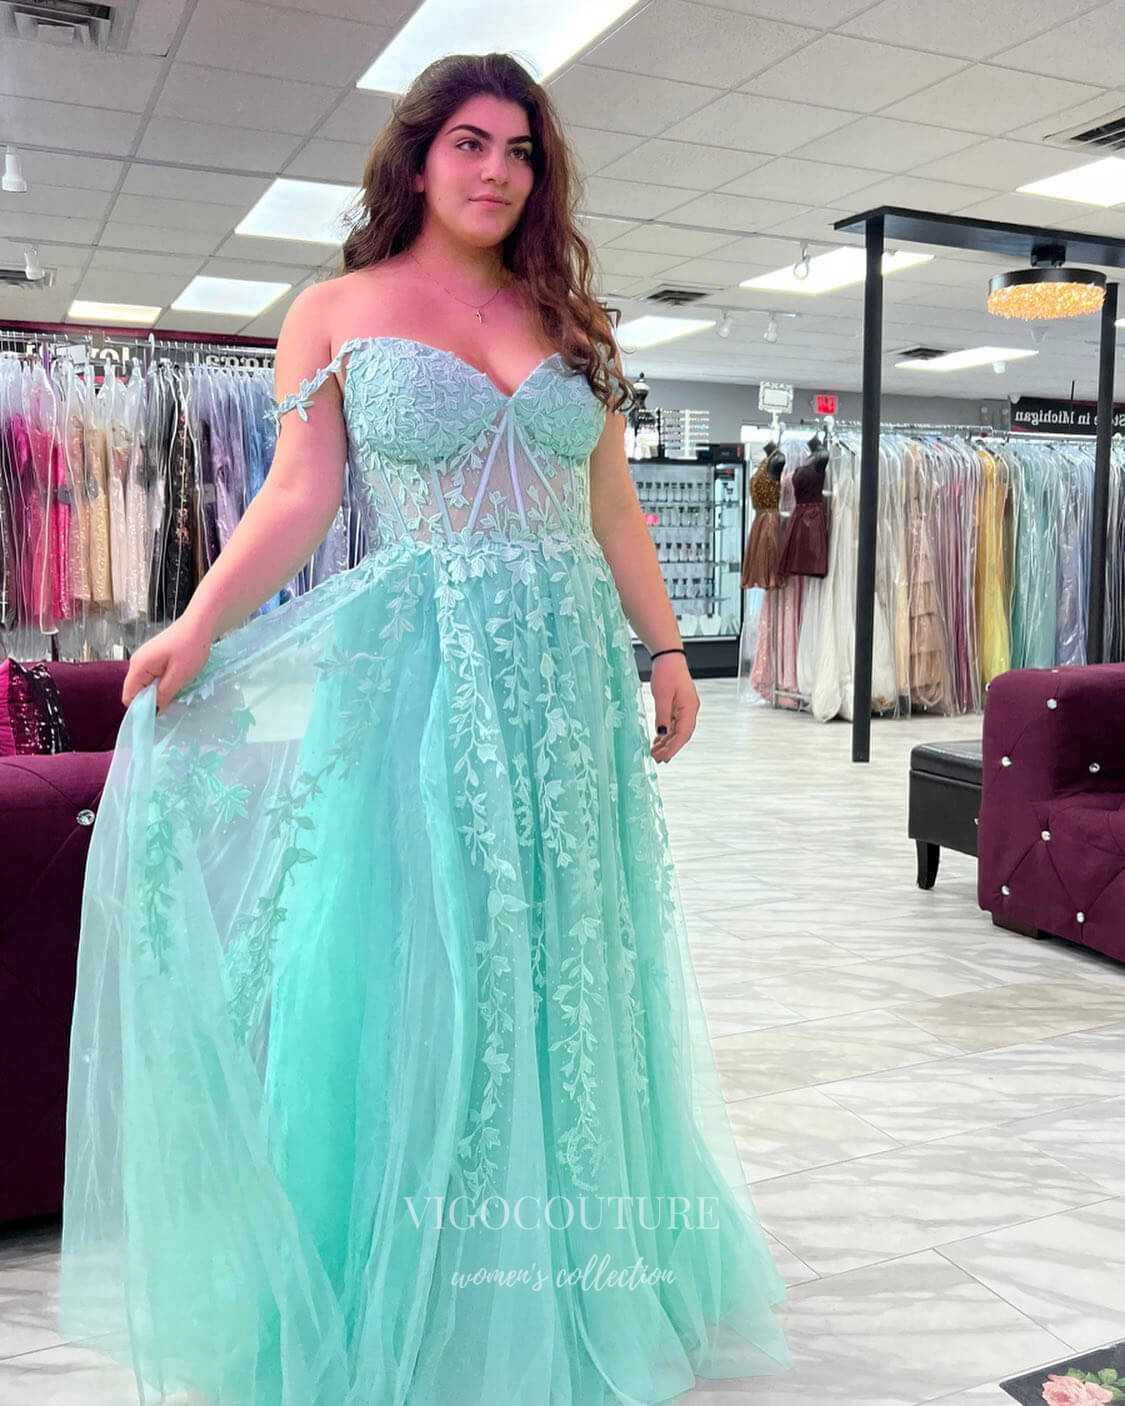 Lavender Lace Applique Prom Dresses with Slit Spaghetti Strap Formal Gown 21879-Prom Dresses-vigocouture-Tiffany-US2-vigocouture